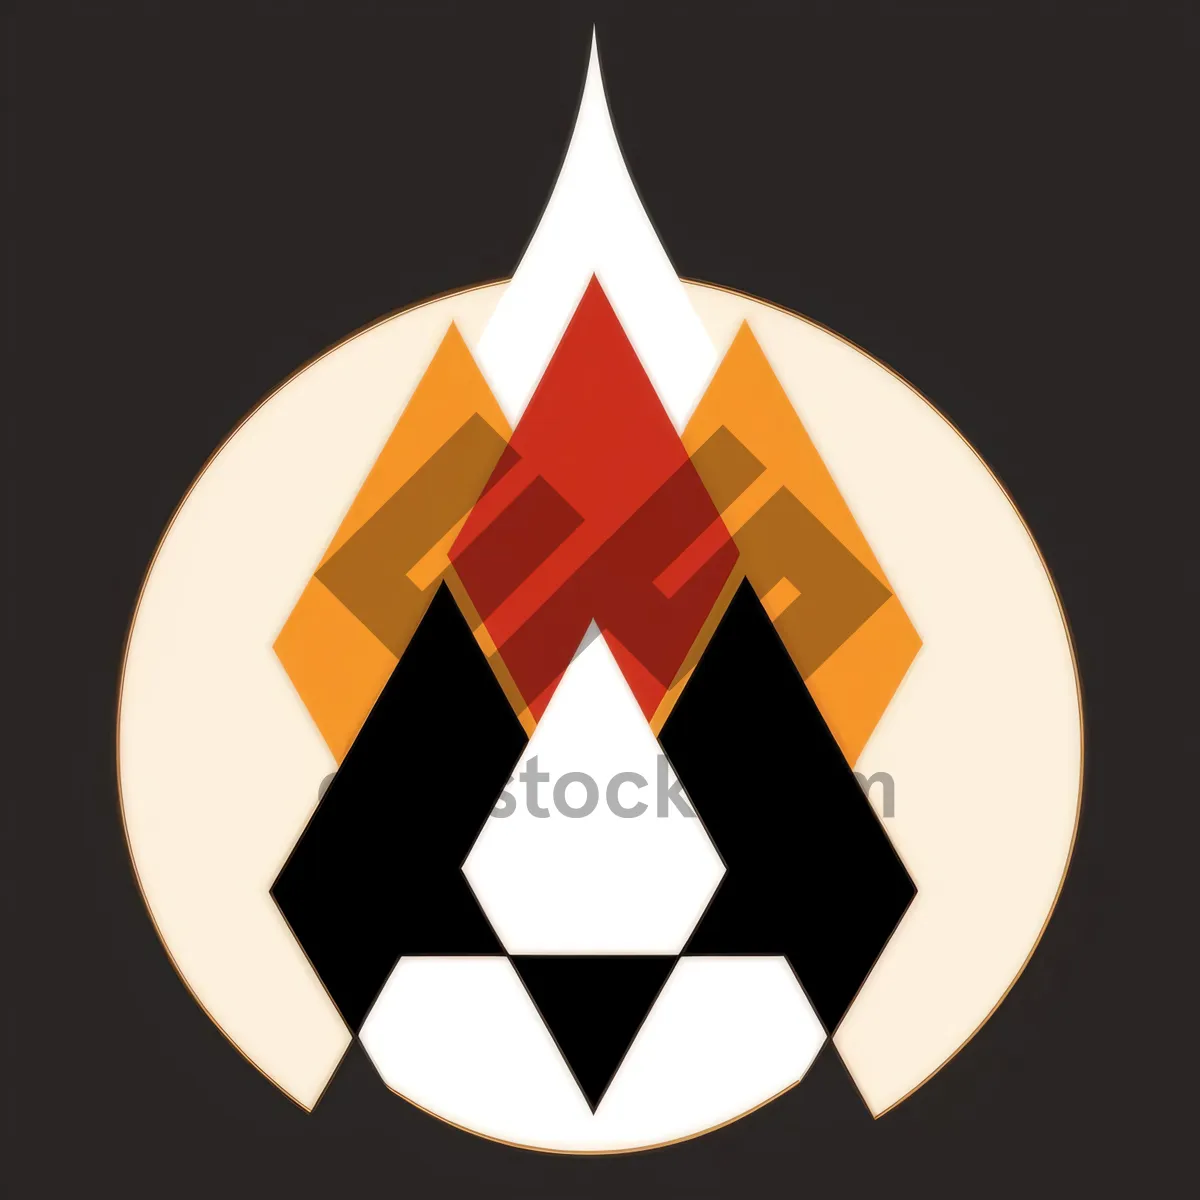 Picture of Heraldic Baron Symbol: Iconic Pyramid Star Graphic Design